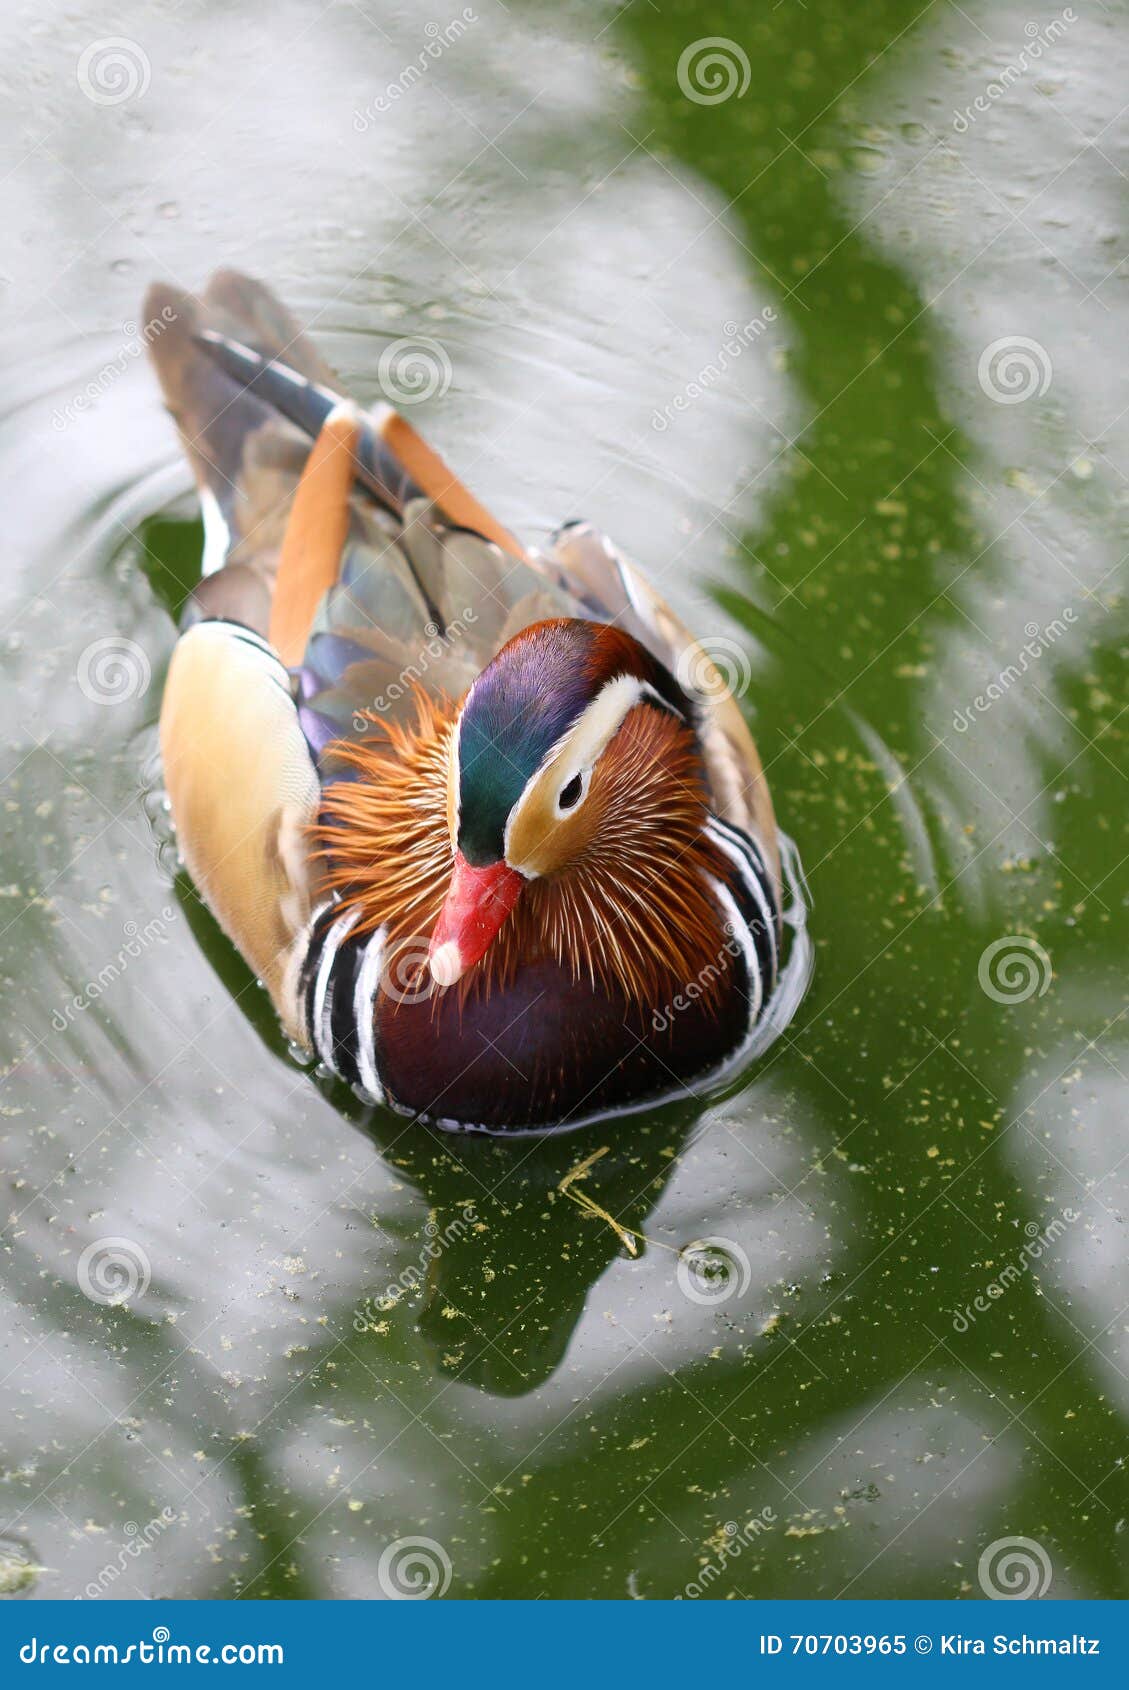 the colorful mandarina duck swimming in the lake